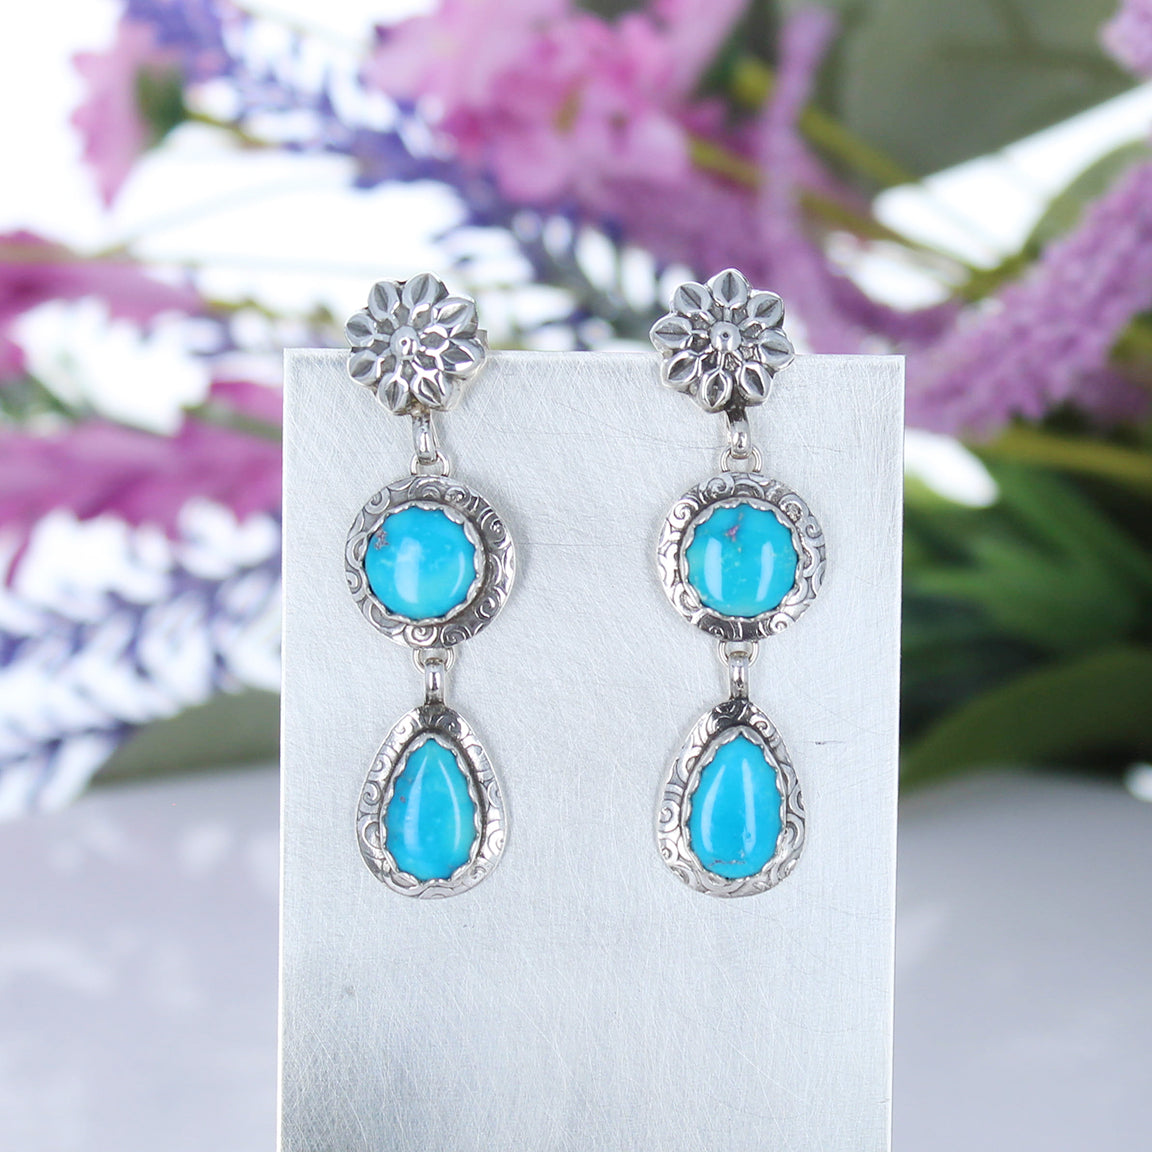 Blue Ridge Turquoise Earrings 2 Stone Deep Sky Blue Spiral Design Sterling